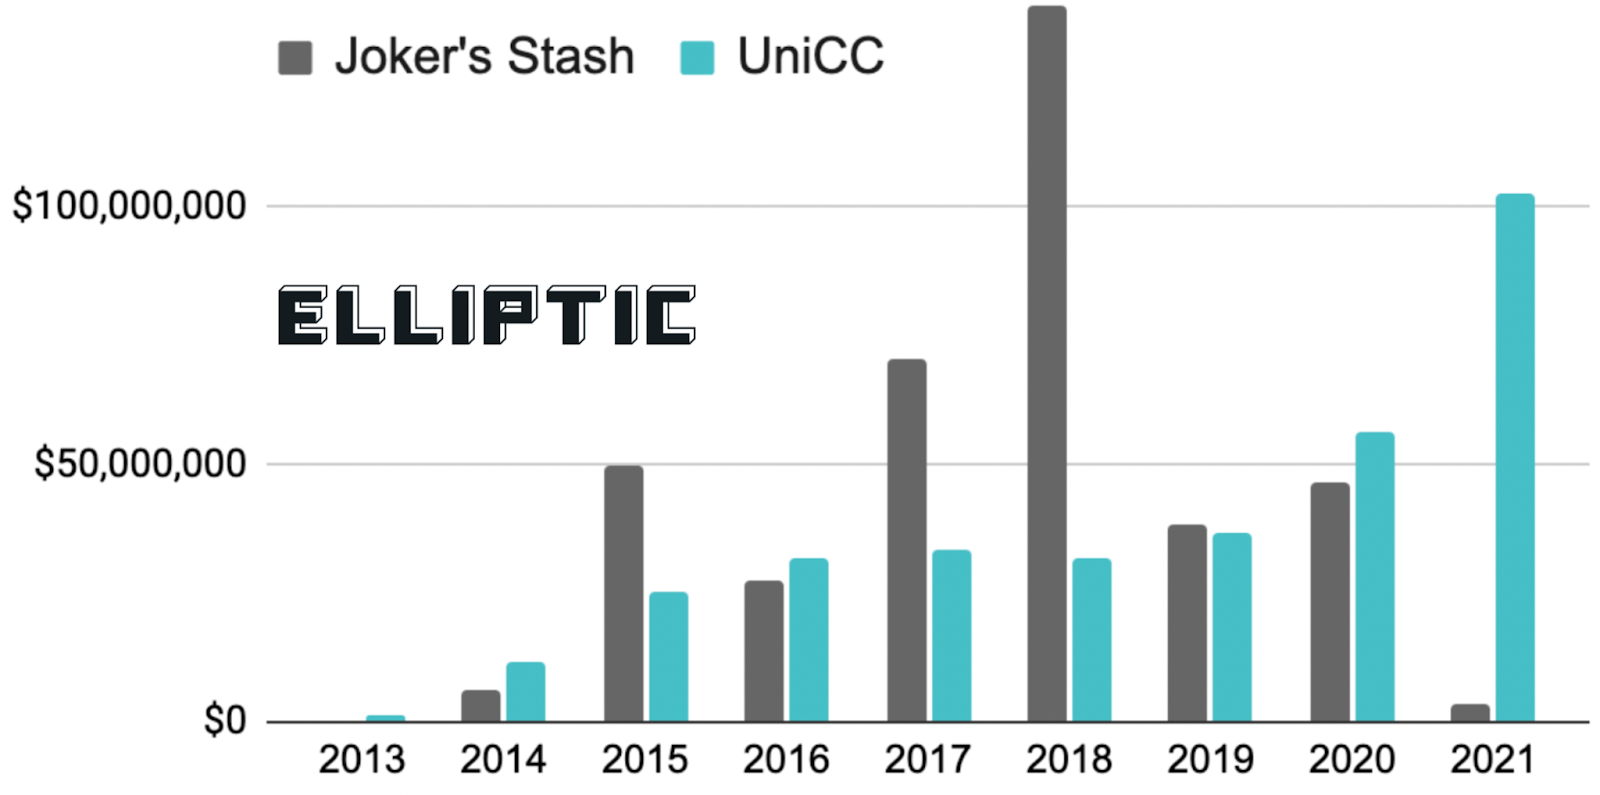 Sales volume activity for UniCC and Joker's Stash